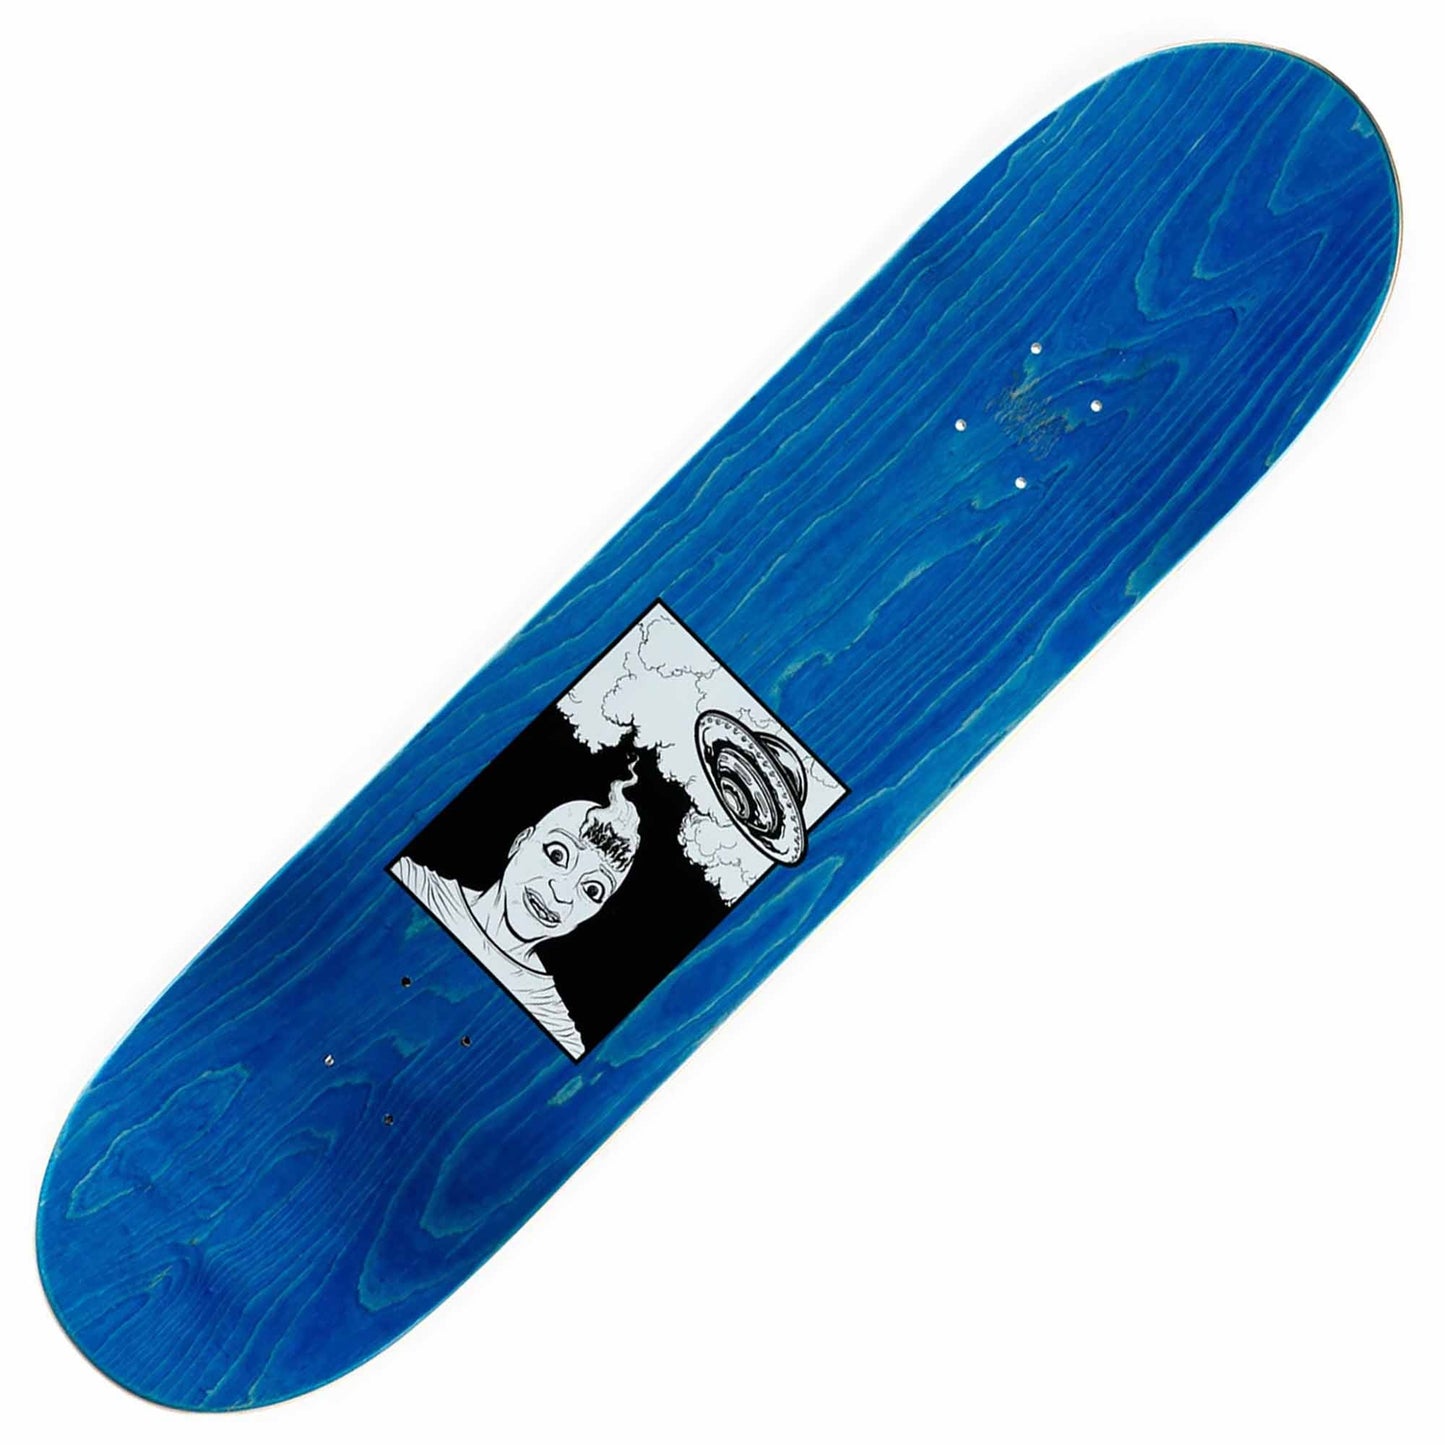 Metal Induction Deck (8.25") - Tiki Room Skateboards - 2